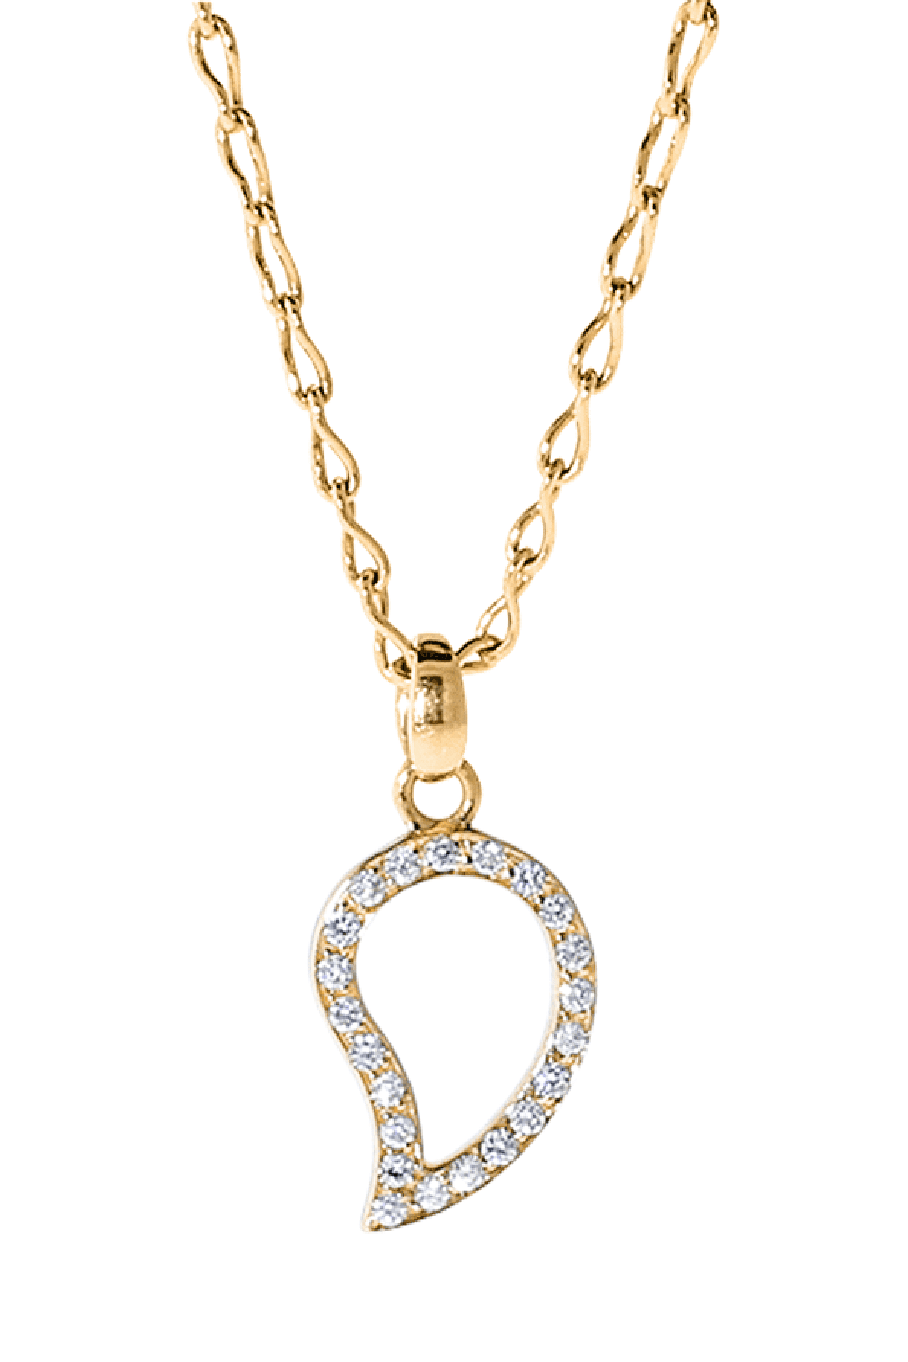 TAMARA COMOLLI-Eight Chain Necklace-YELLOW GOLD